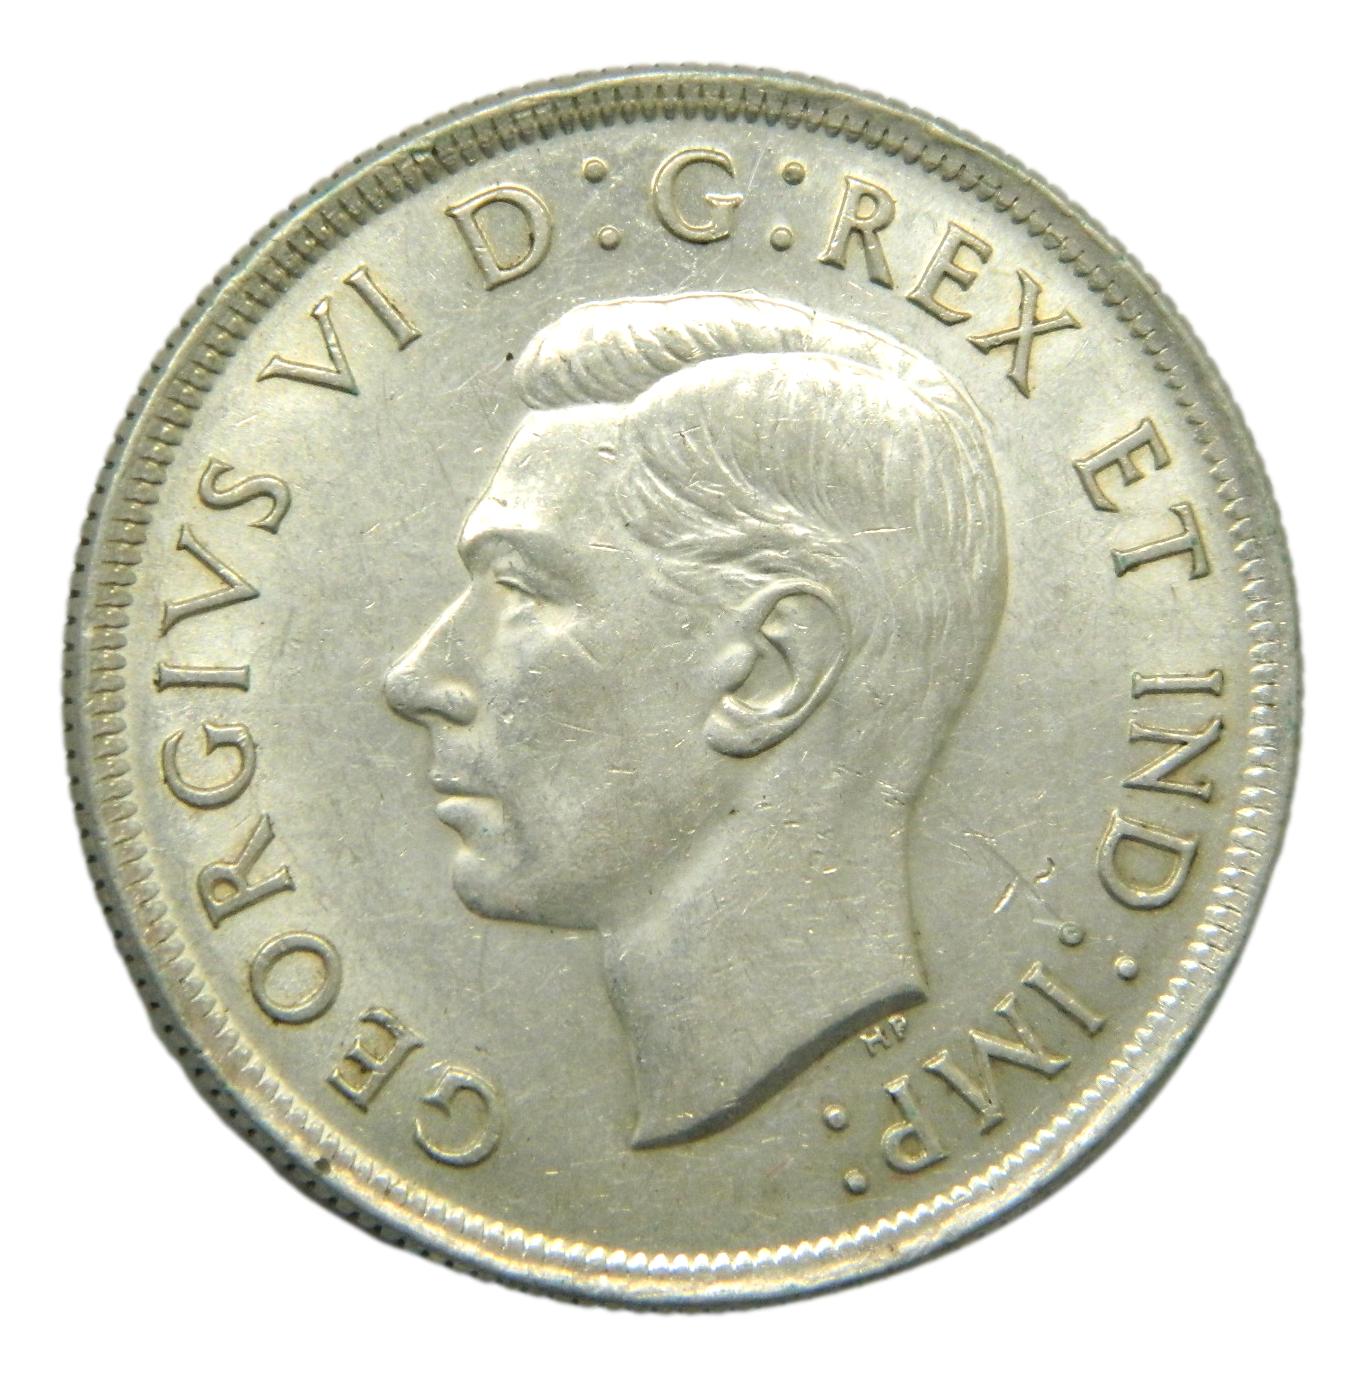 1937 - CANADA - DOLAR - GEOGIUS VI - PLATA